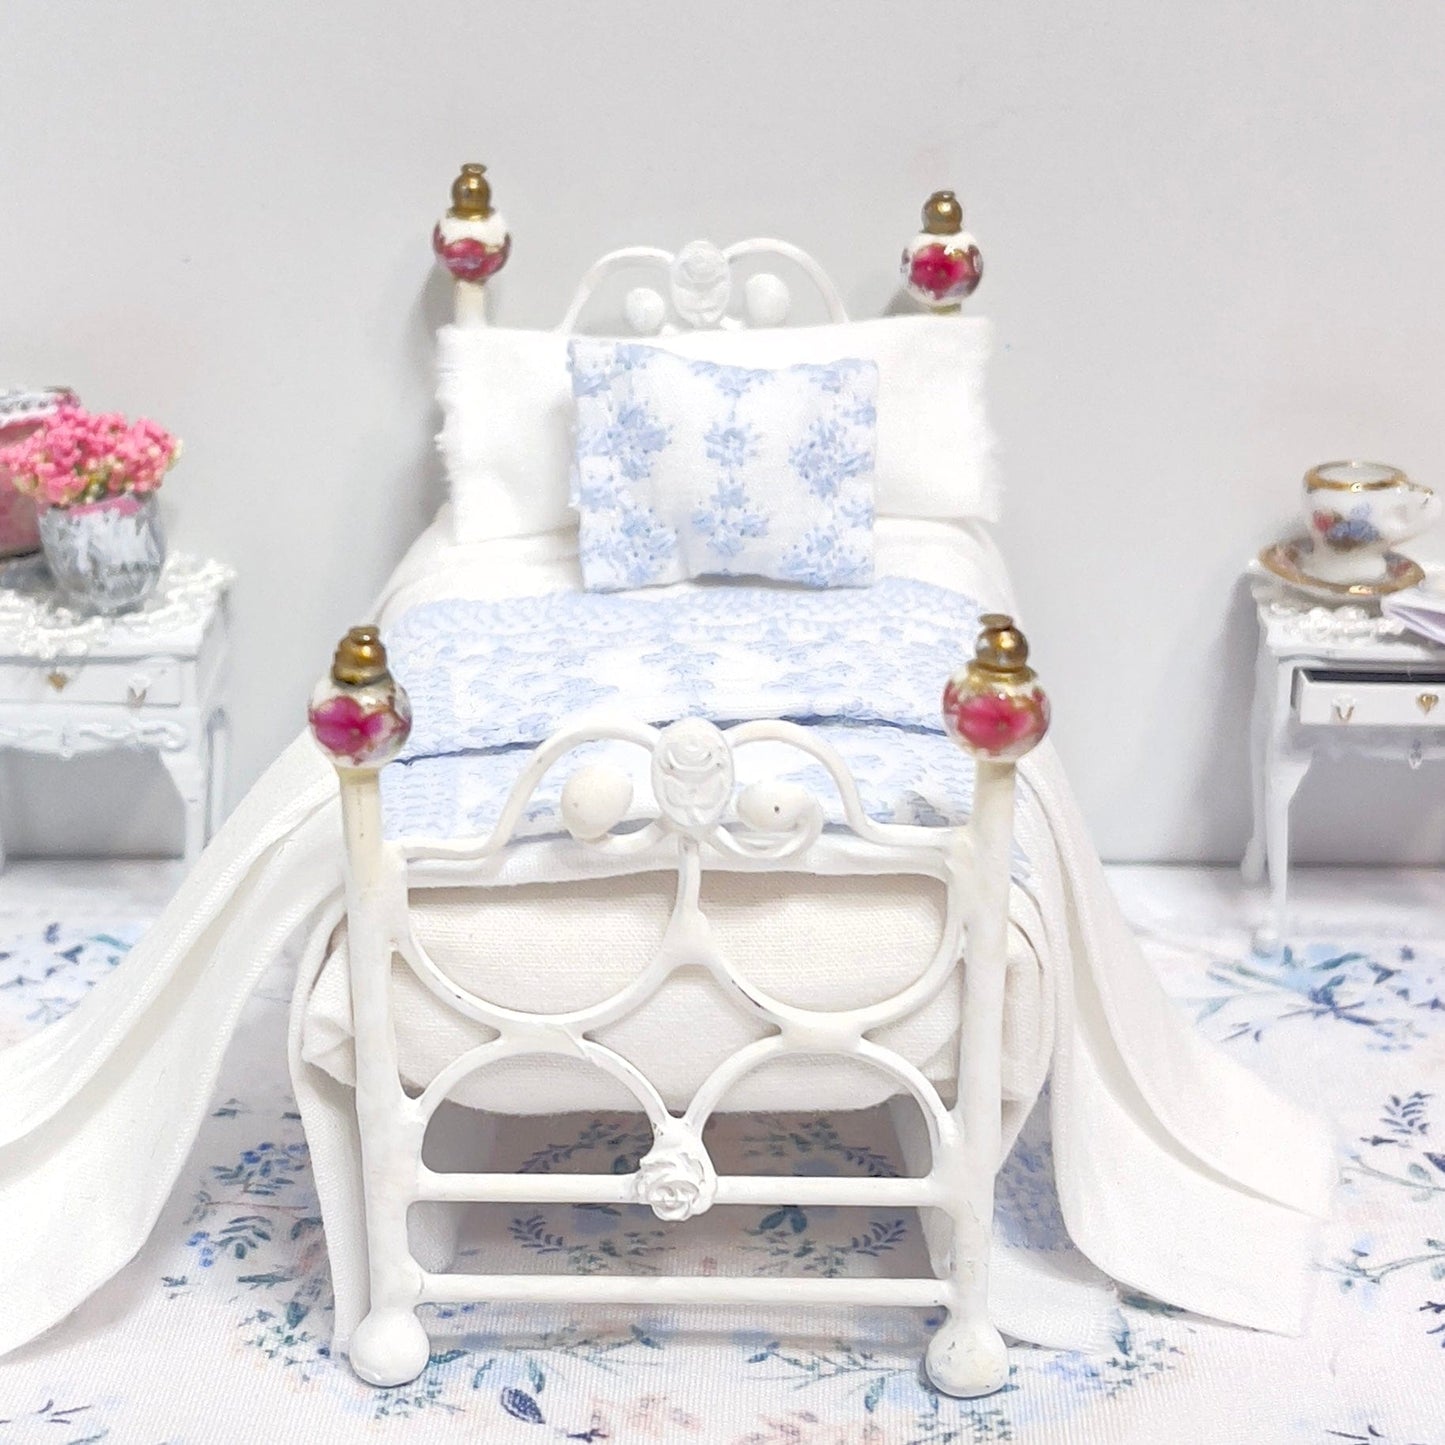 CHANTALLENA Dollhouse Accessories 1:24 Scale | Five Piece Blue Embroidered Cotton Dollhouse Bedding Set | Petite Abigail